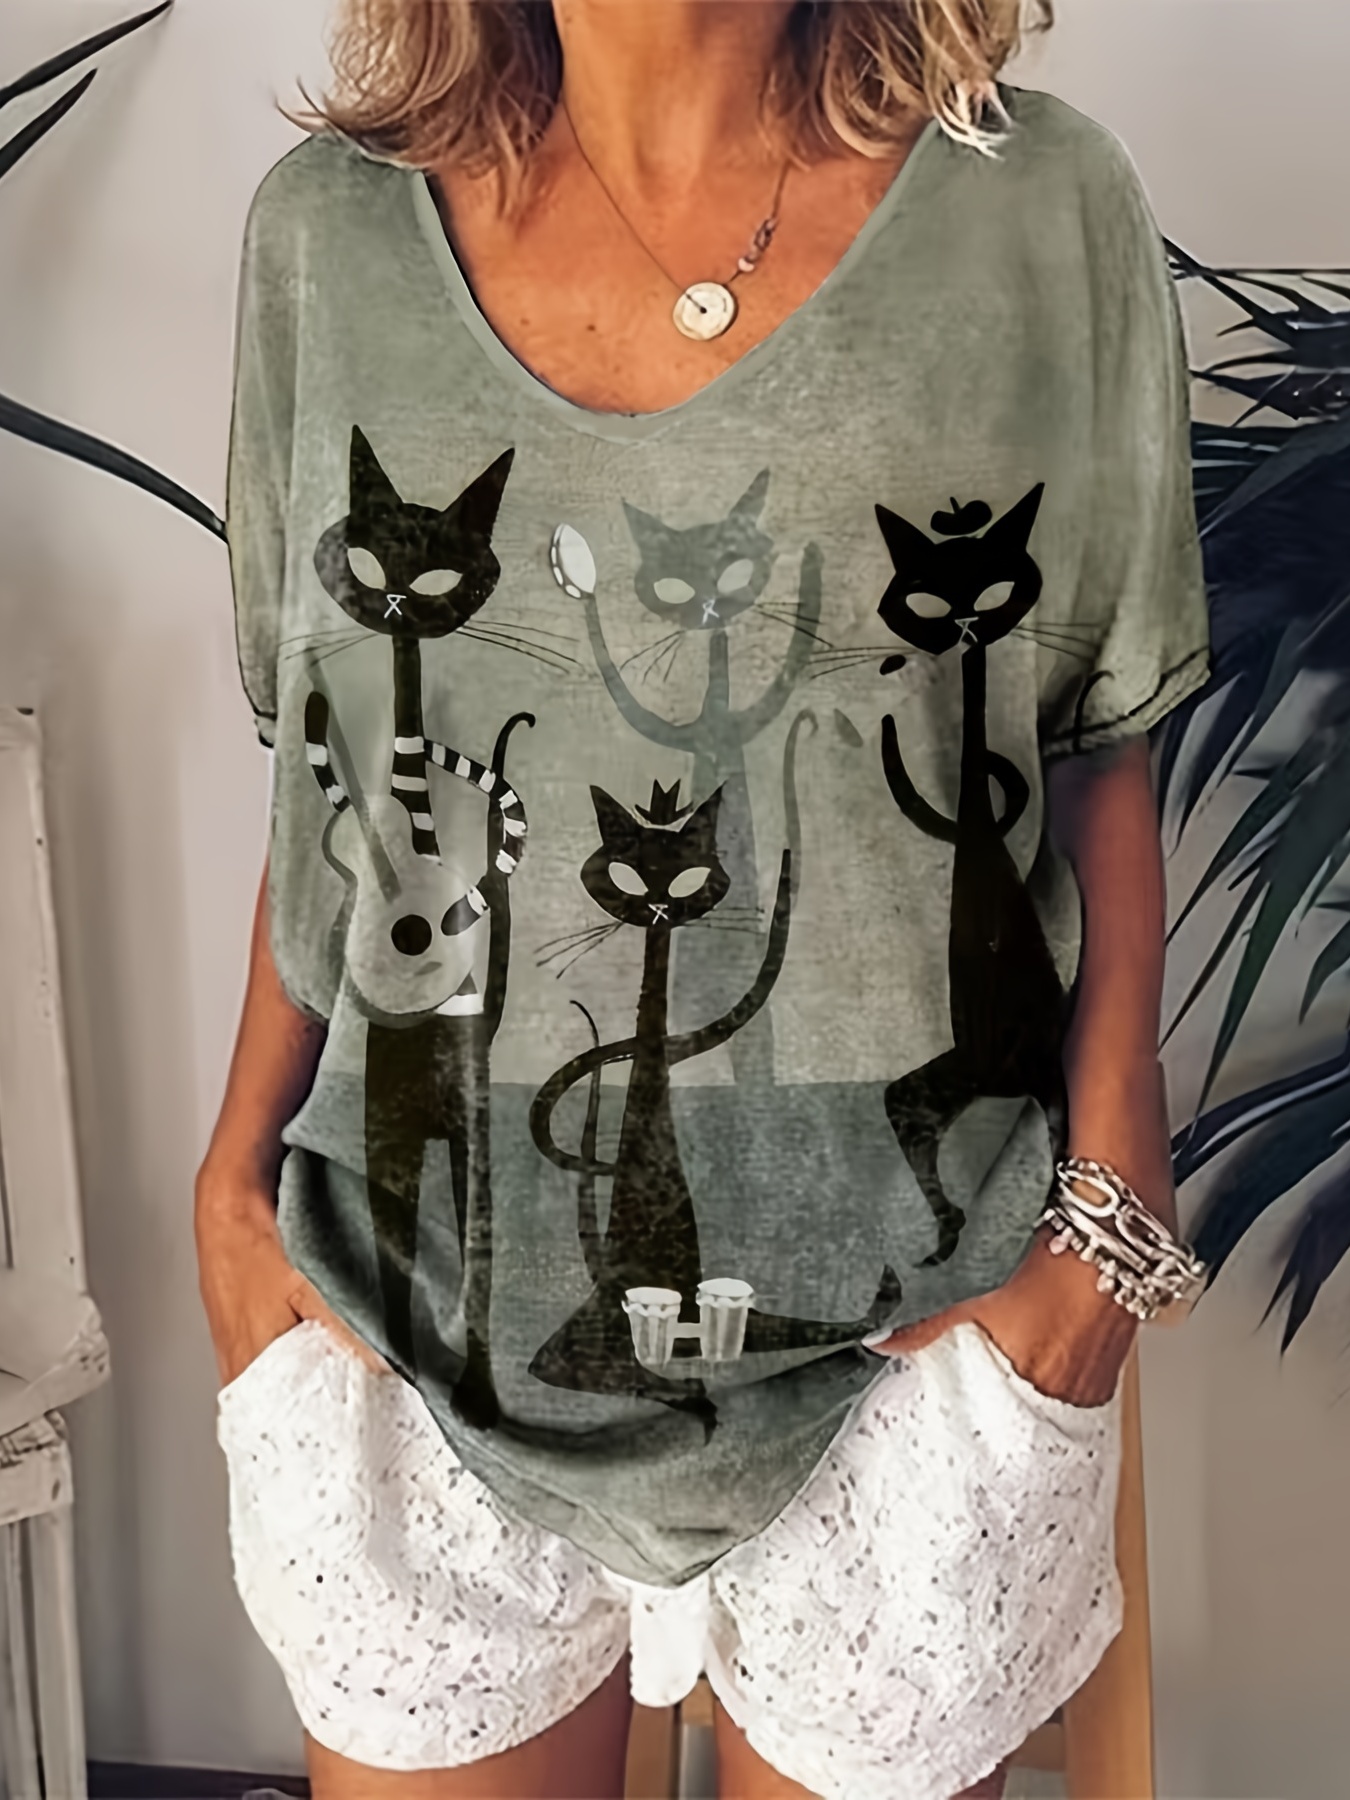 Summer Women's T-shirt Funny Cat Fish Print TShirt Women Clothing -  Only Cat Shirts